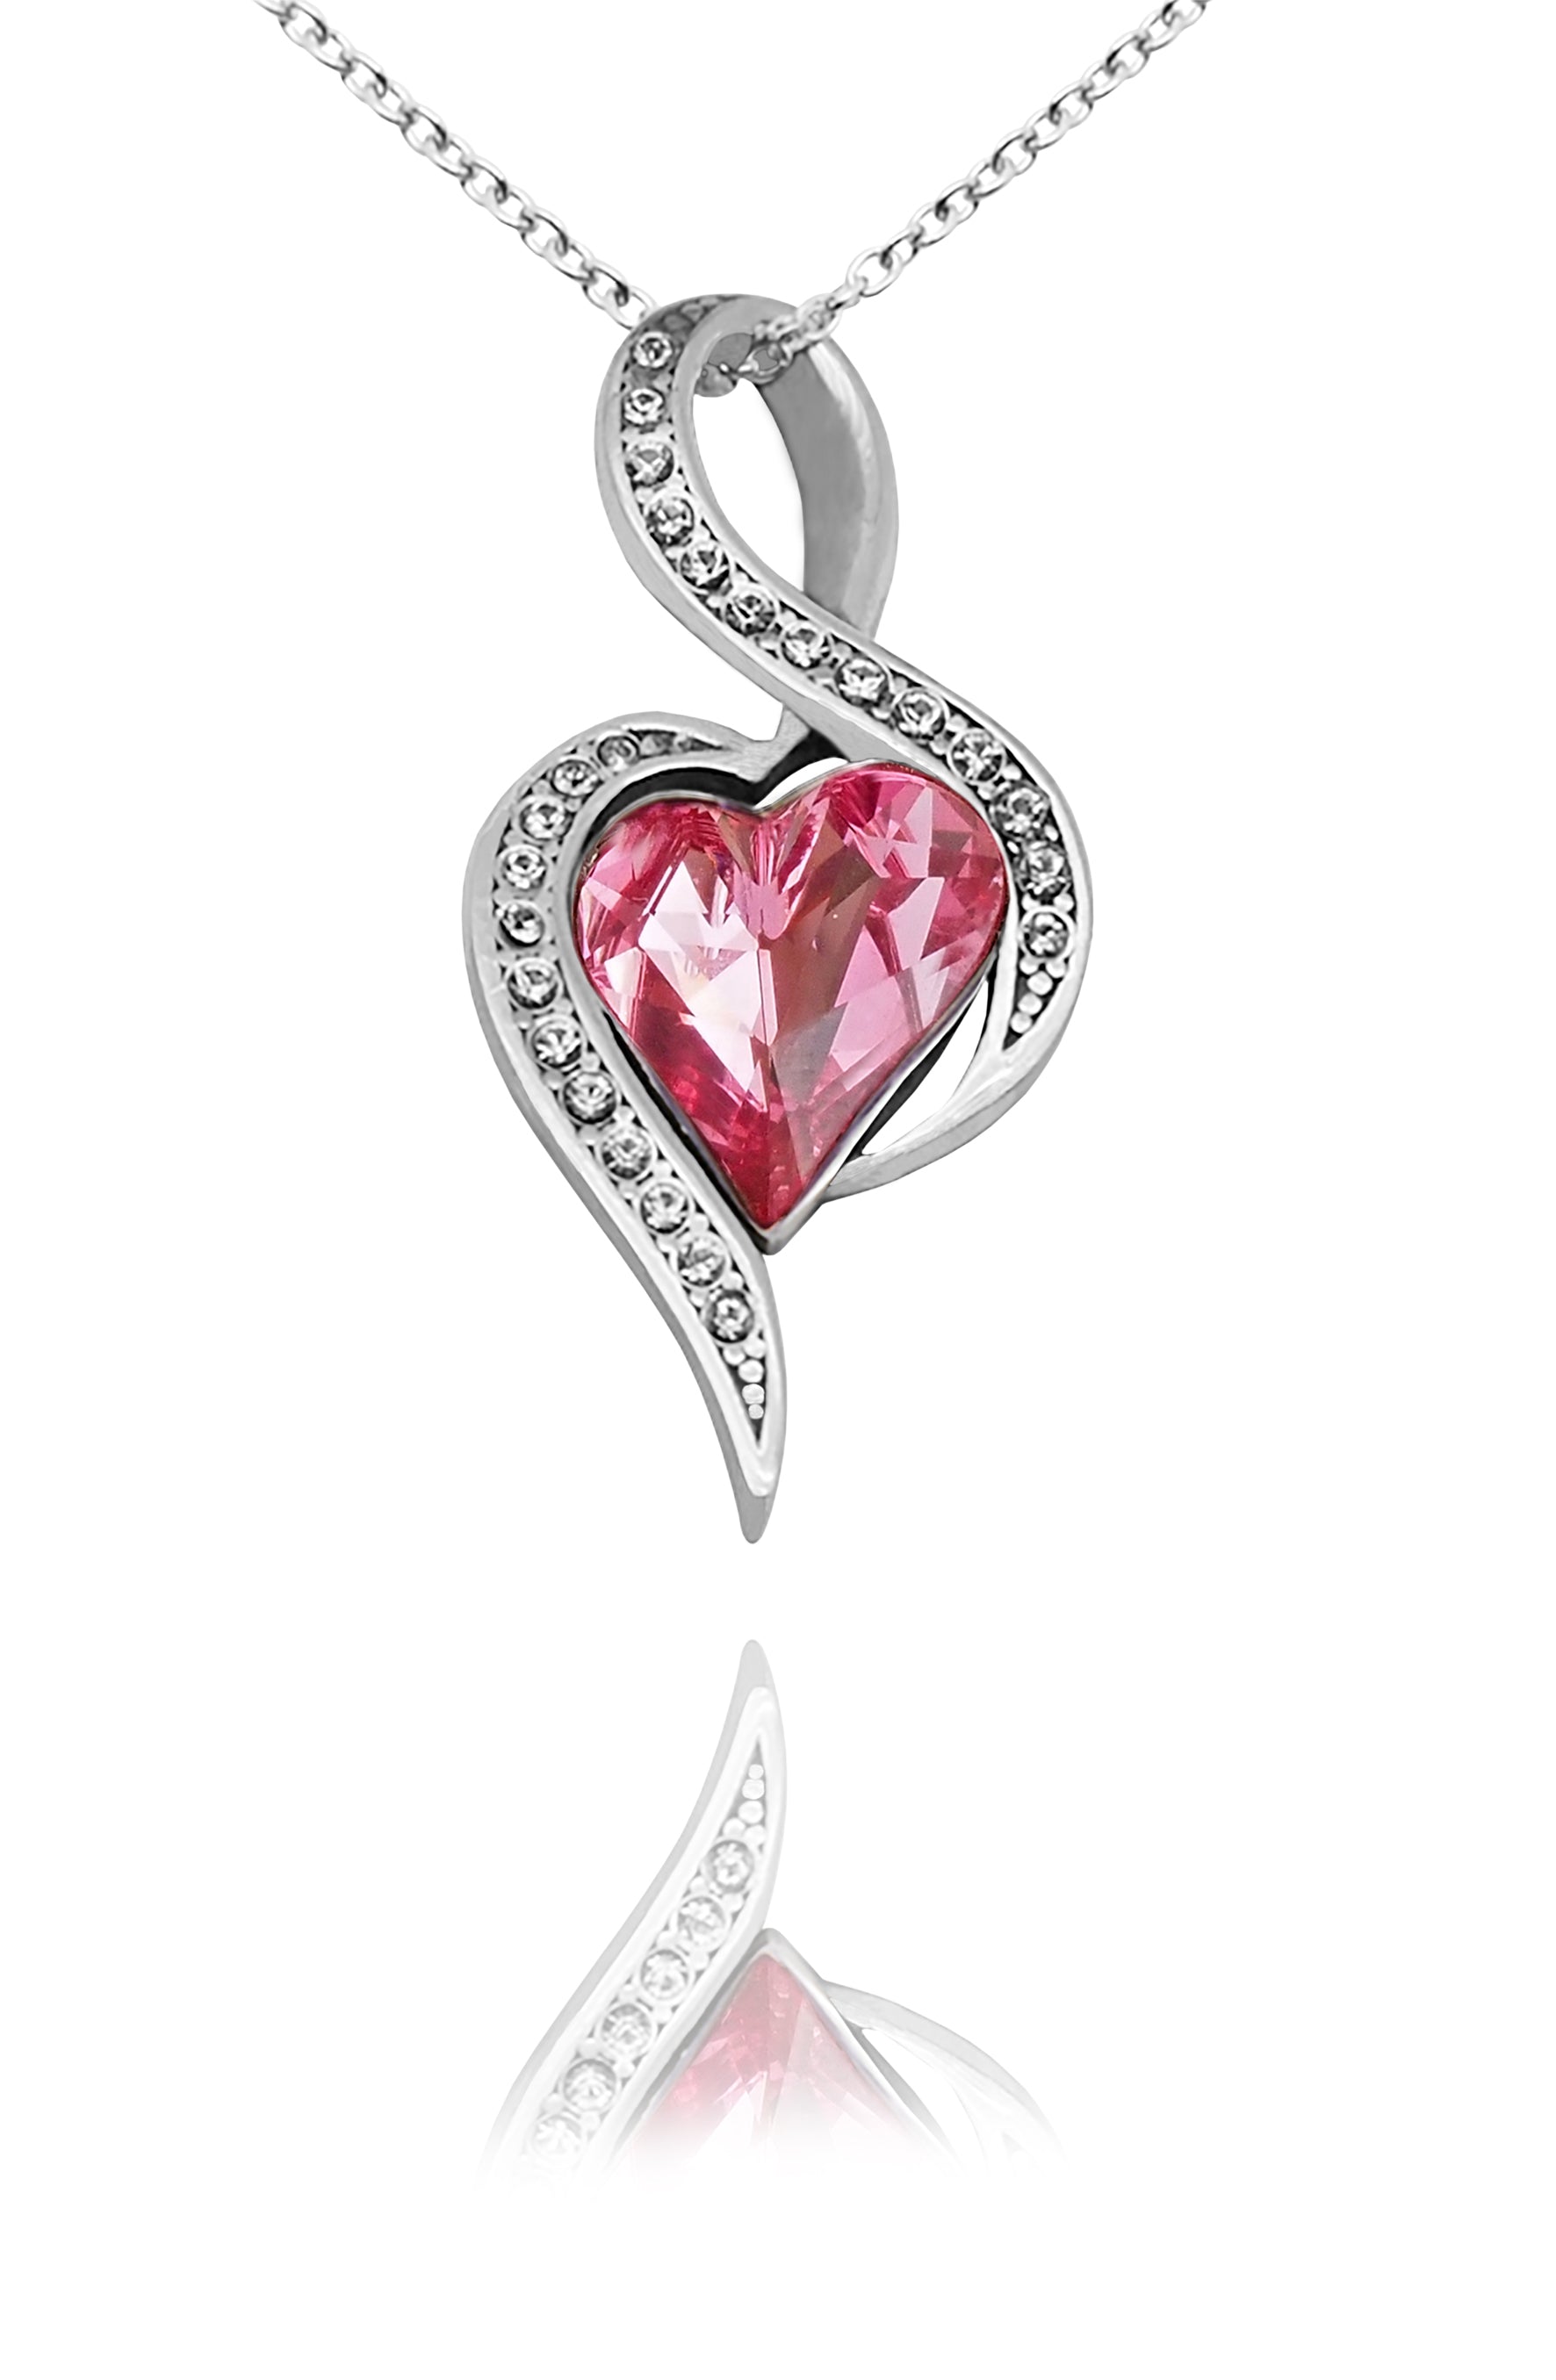 Carnation Pink Round Crystal Necklace | Shop at TieMart – TieMart, Inc.